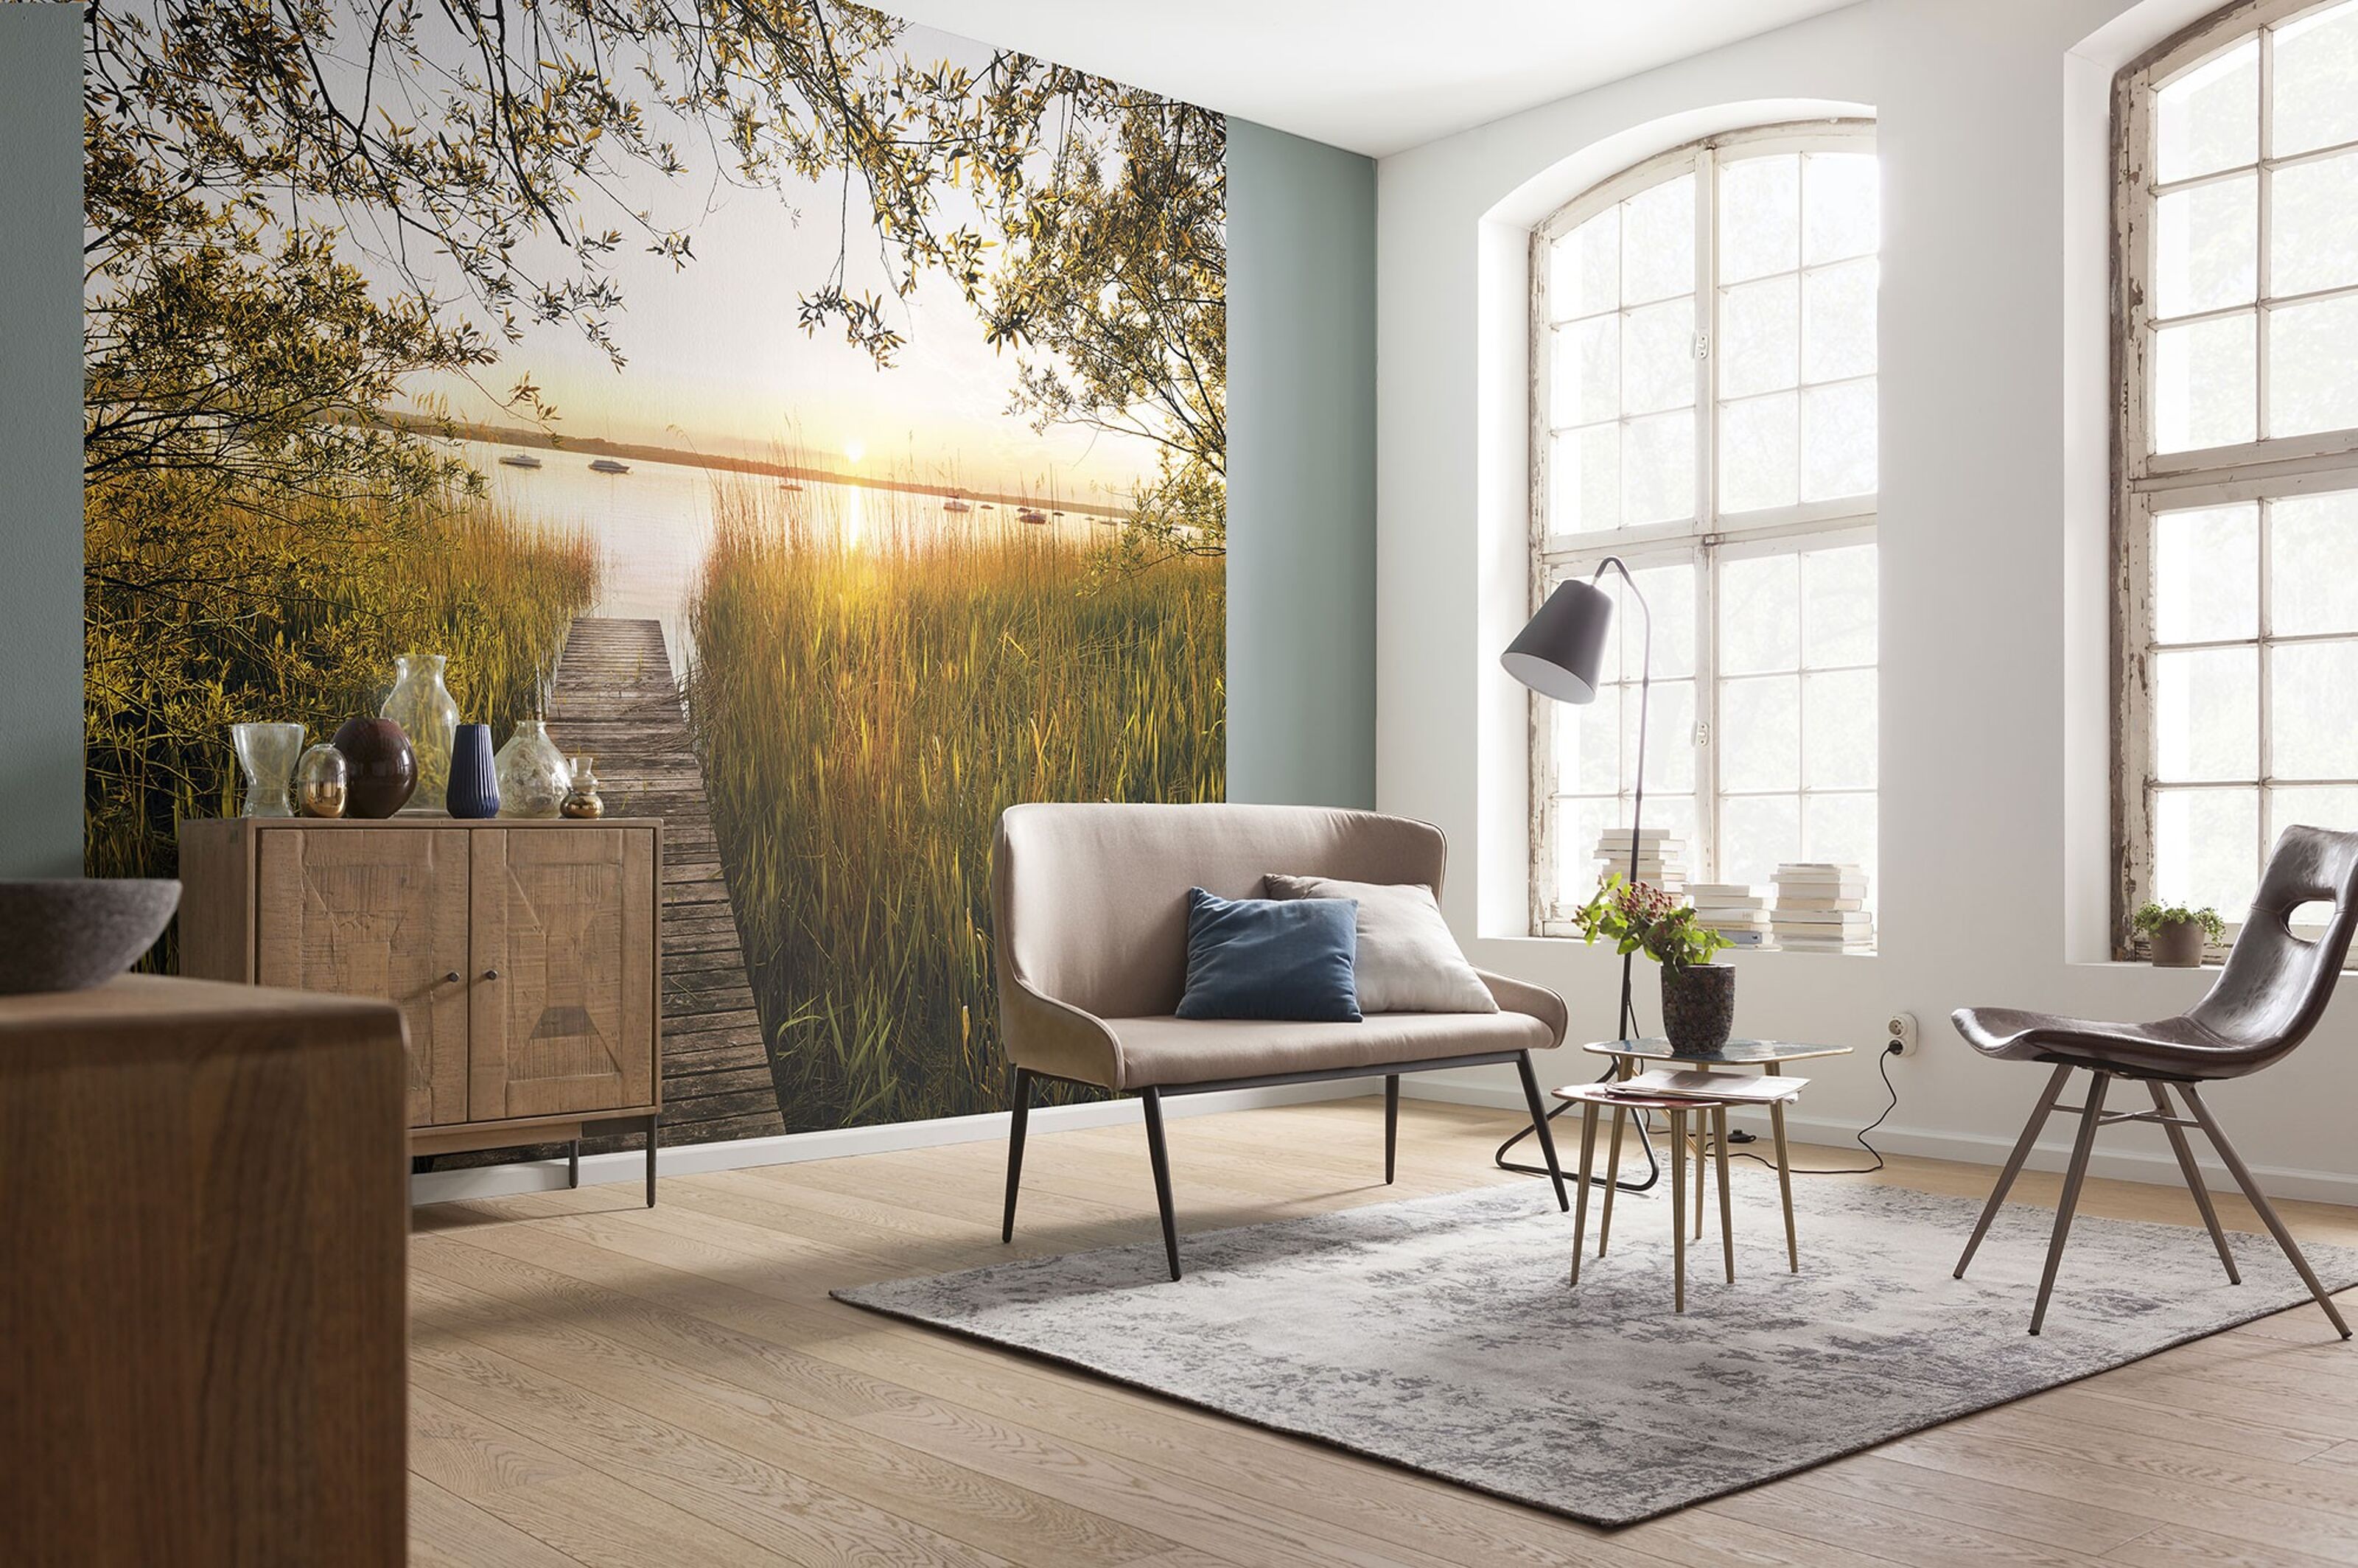 cm wholesale photo size Buy - 300 - Non-woven wallpaper 250 x Lakeside